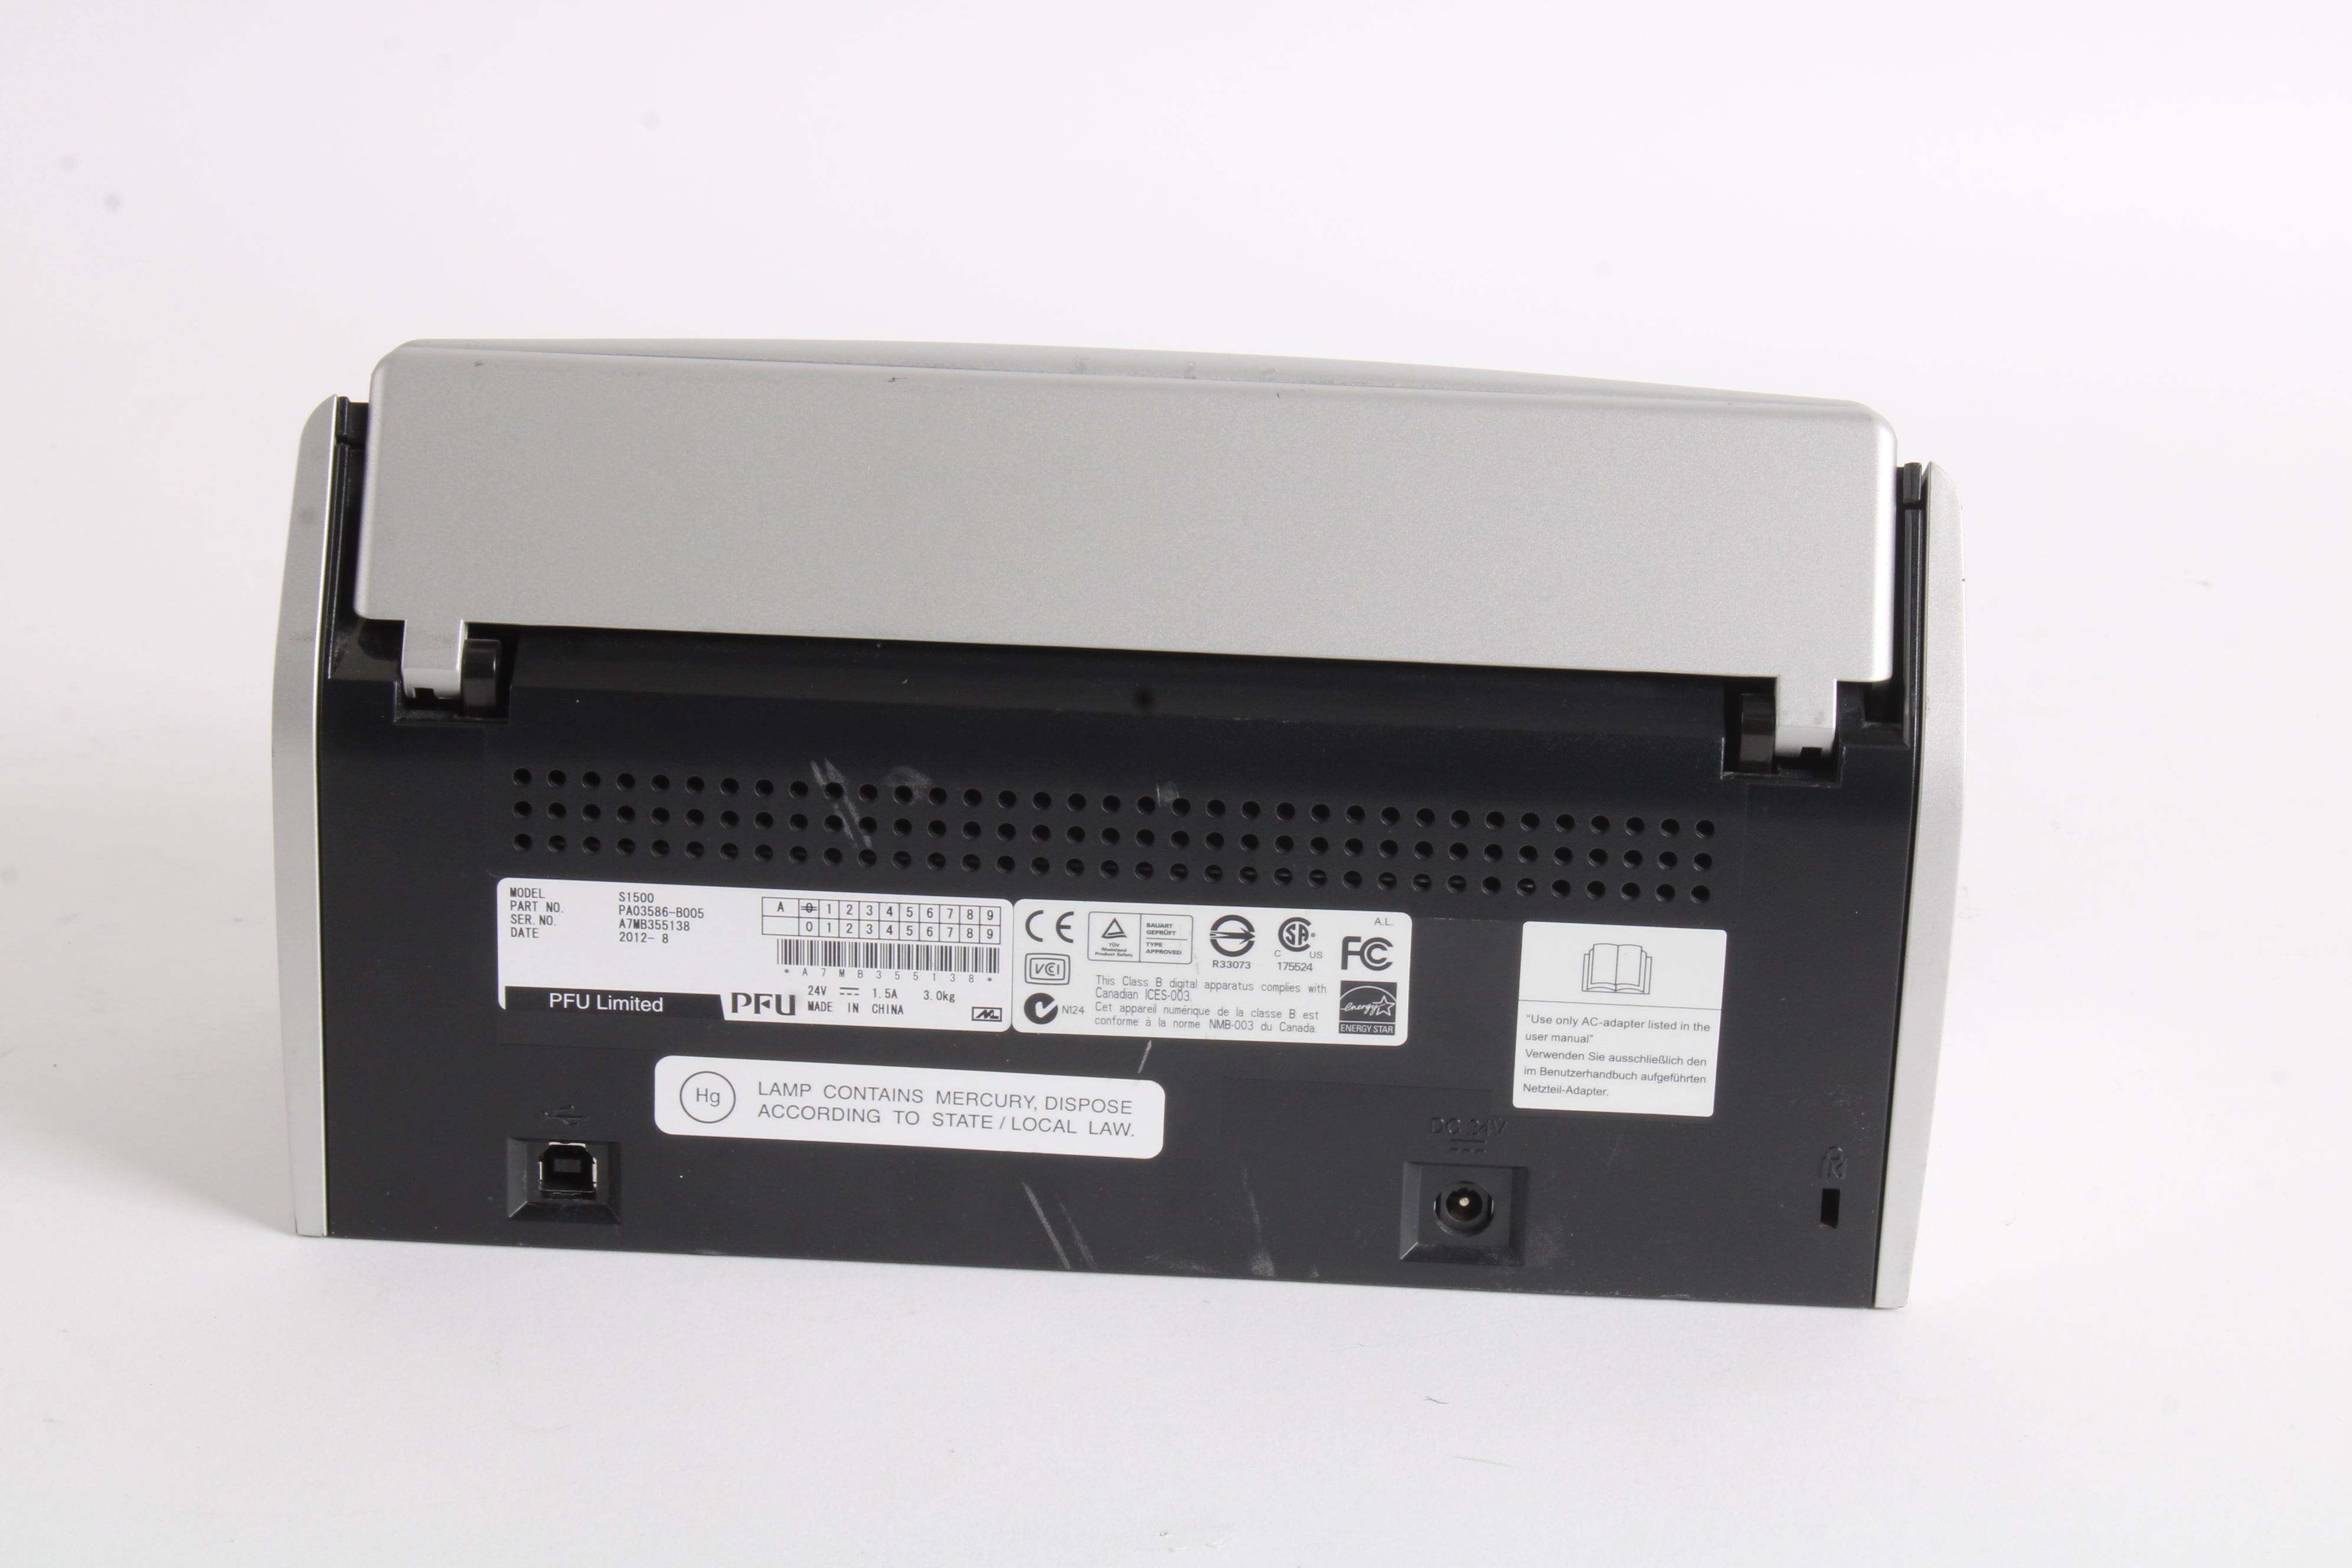 Fujitsu ScanSnap S1500 Document Scanner PA03586-B005 - Fair